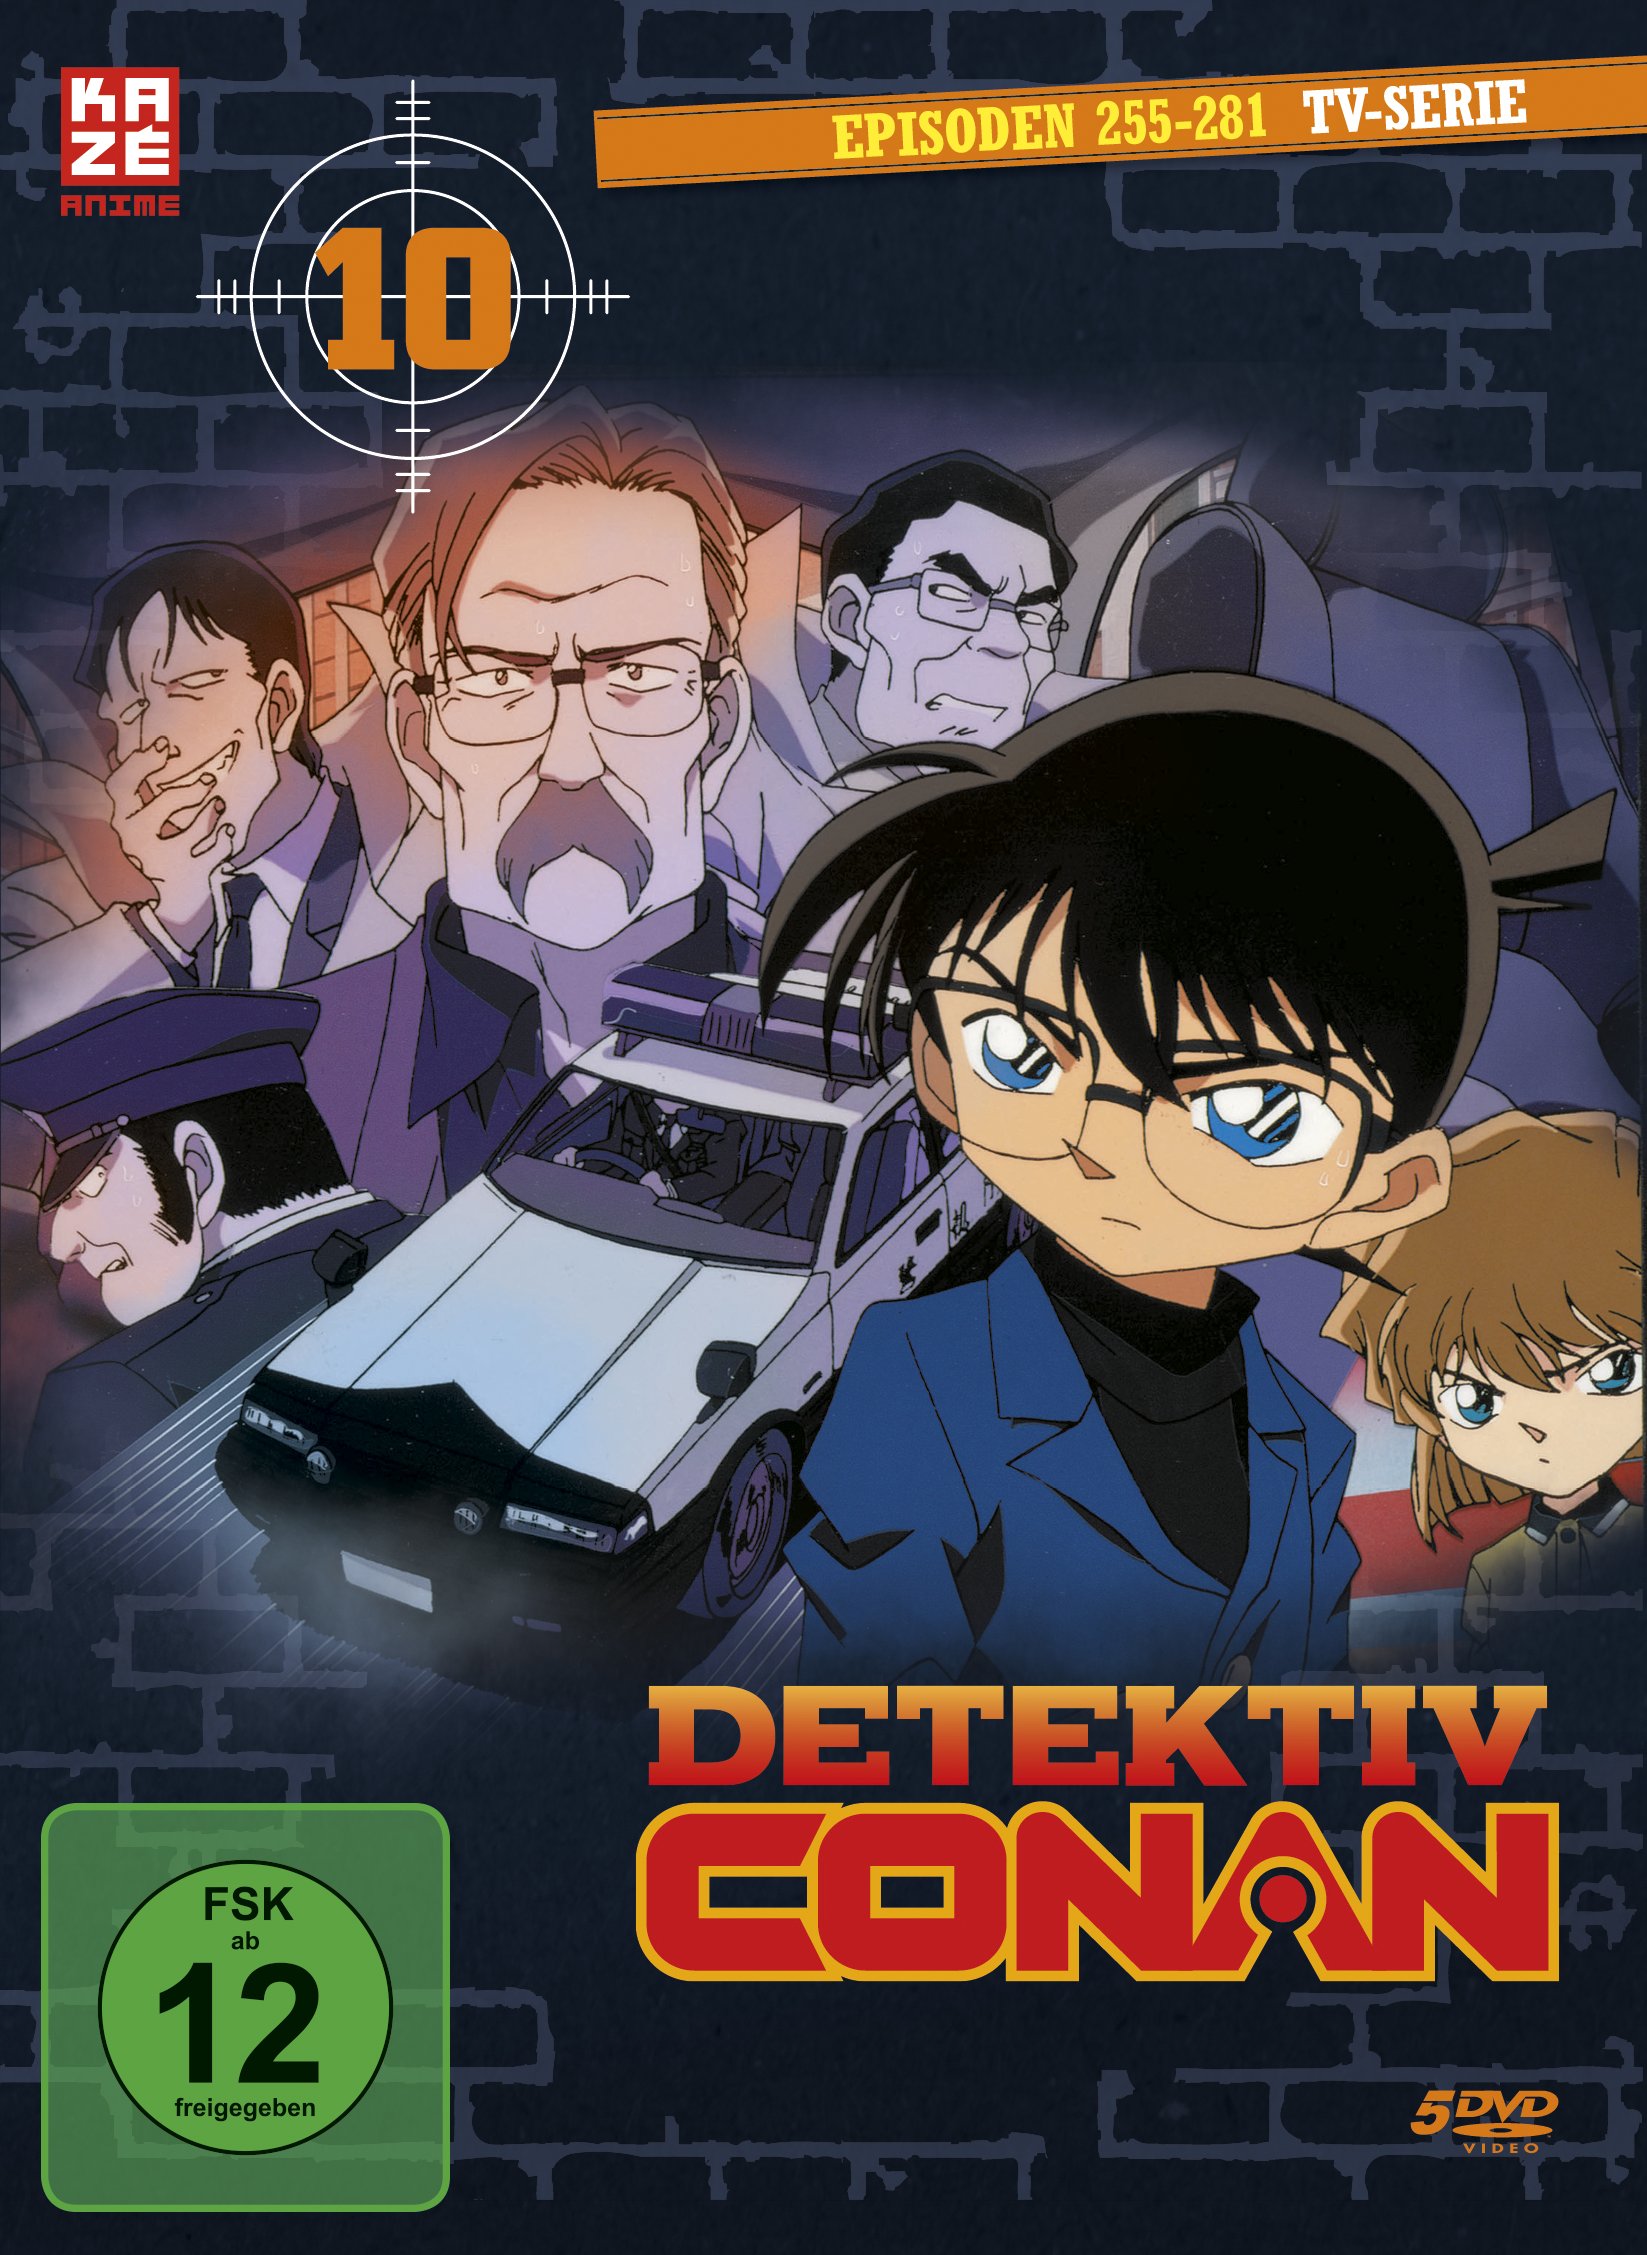 Detektiv Conan - DVD 10 DVD (Episoden - 255-280) Box TV-Serie